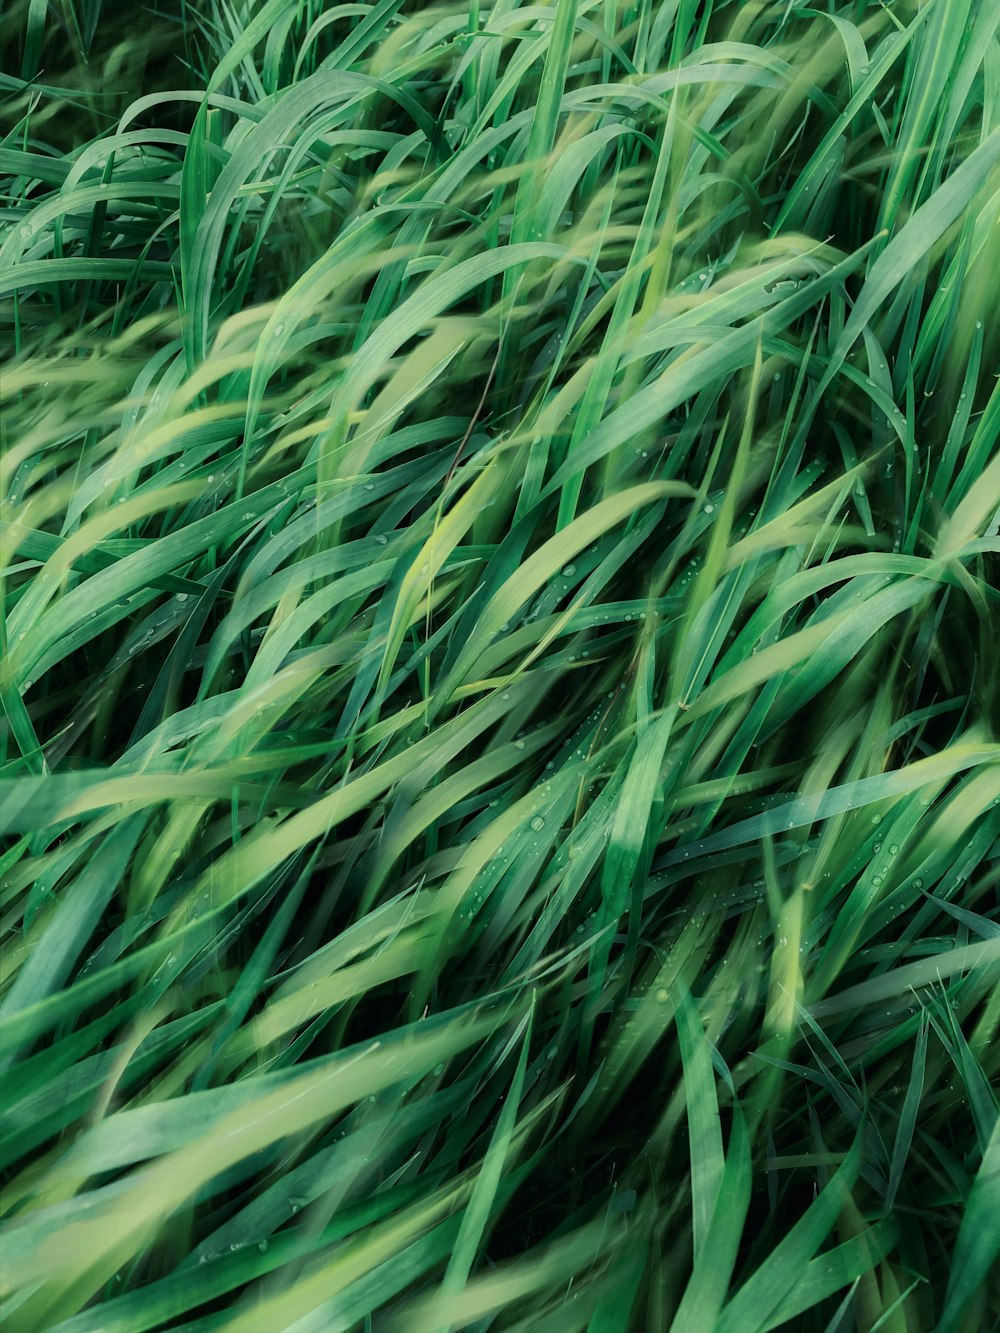 a close up of a bunch of green grass